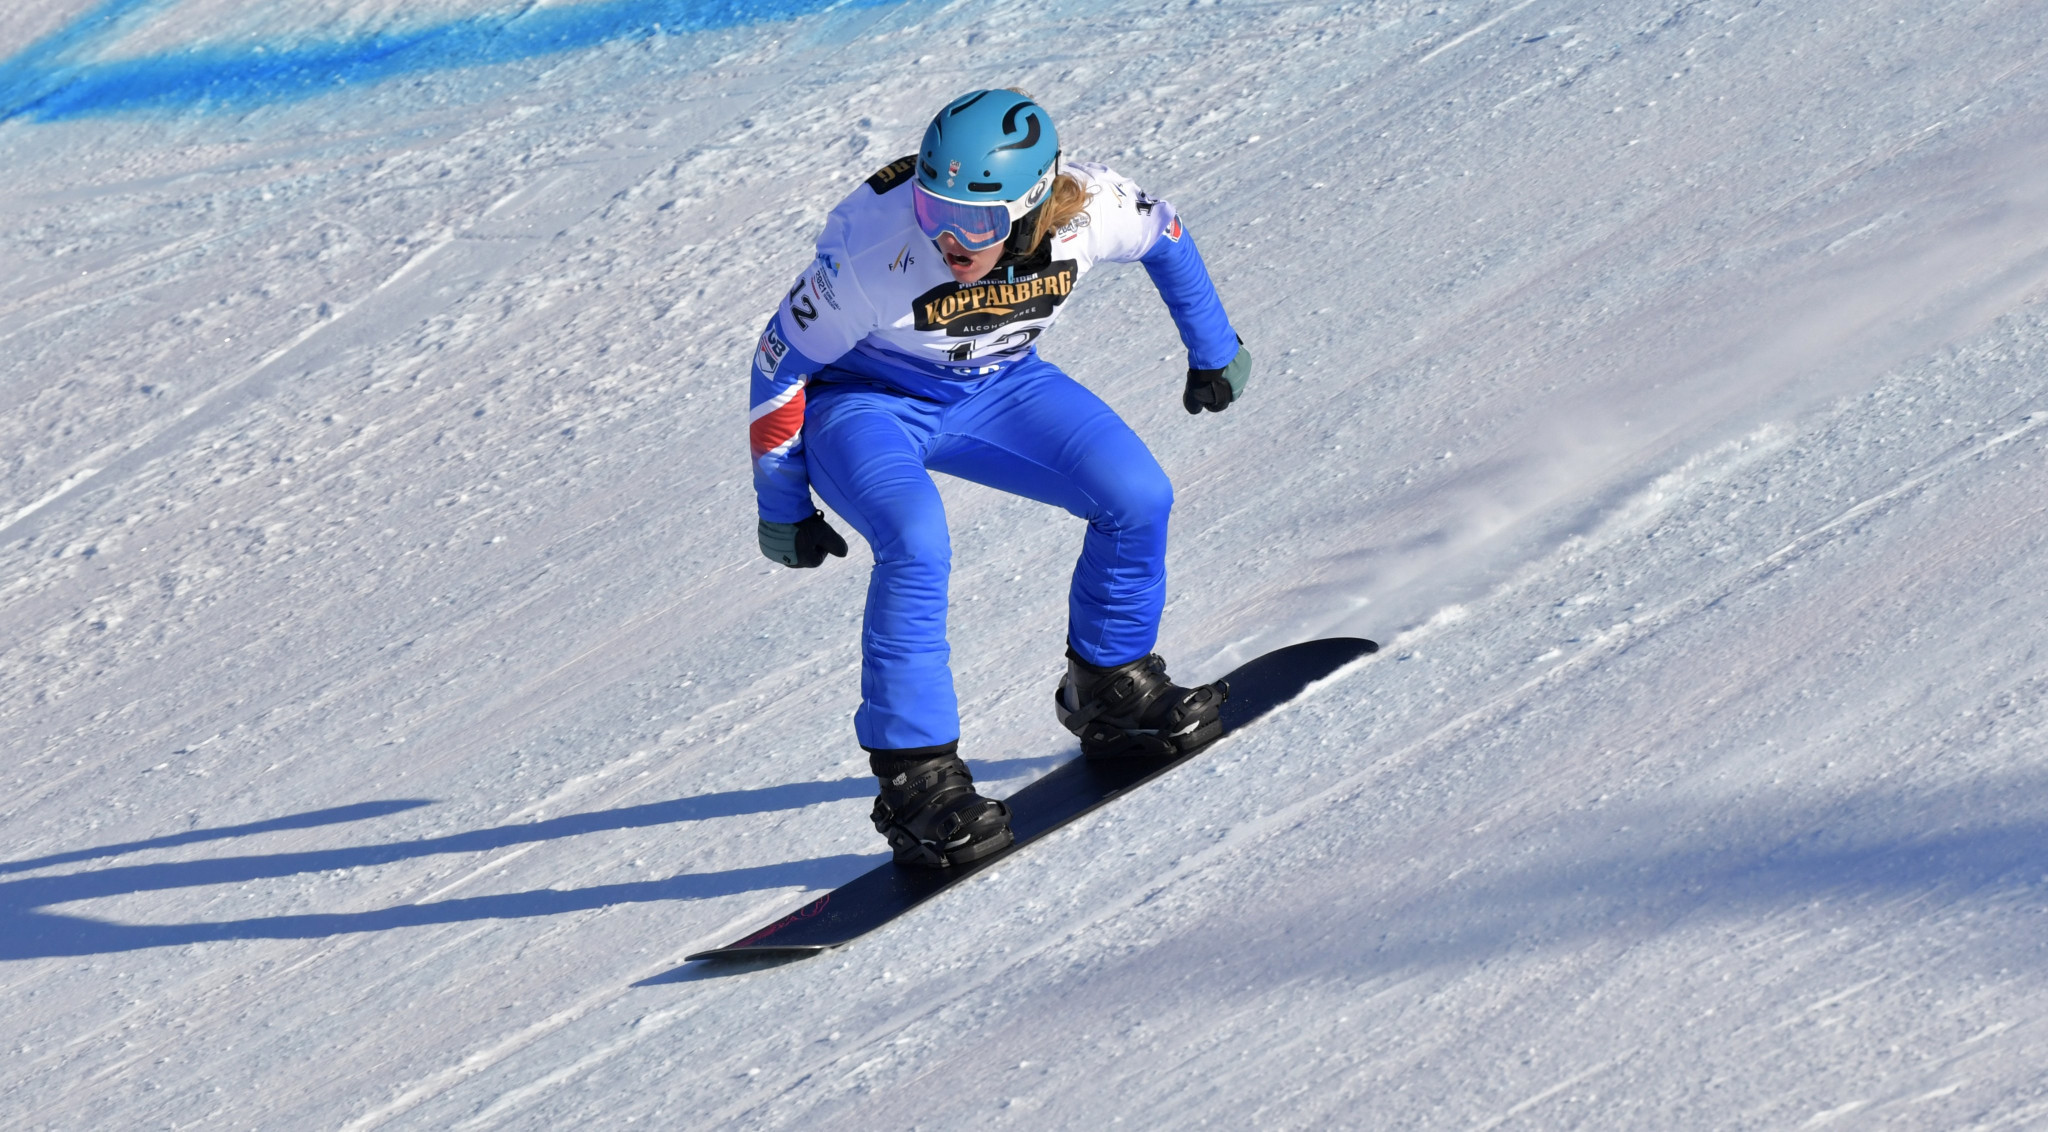 Bankes tops qualifying at Snowboard Cross World Cup in Krasnoyarsk